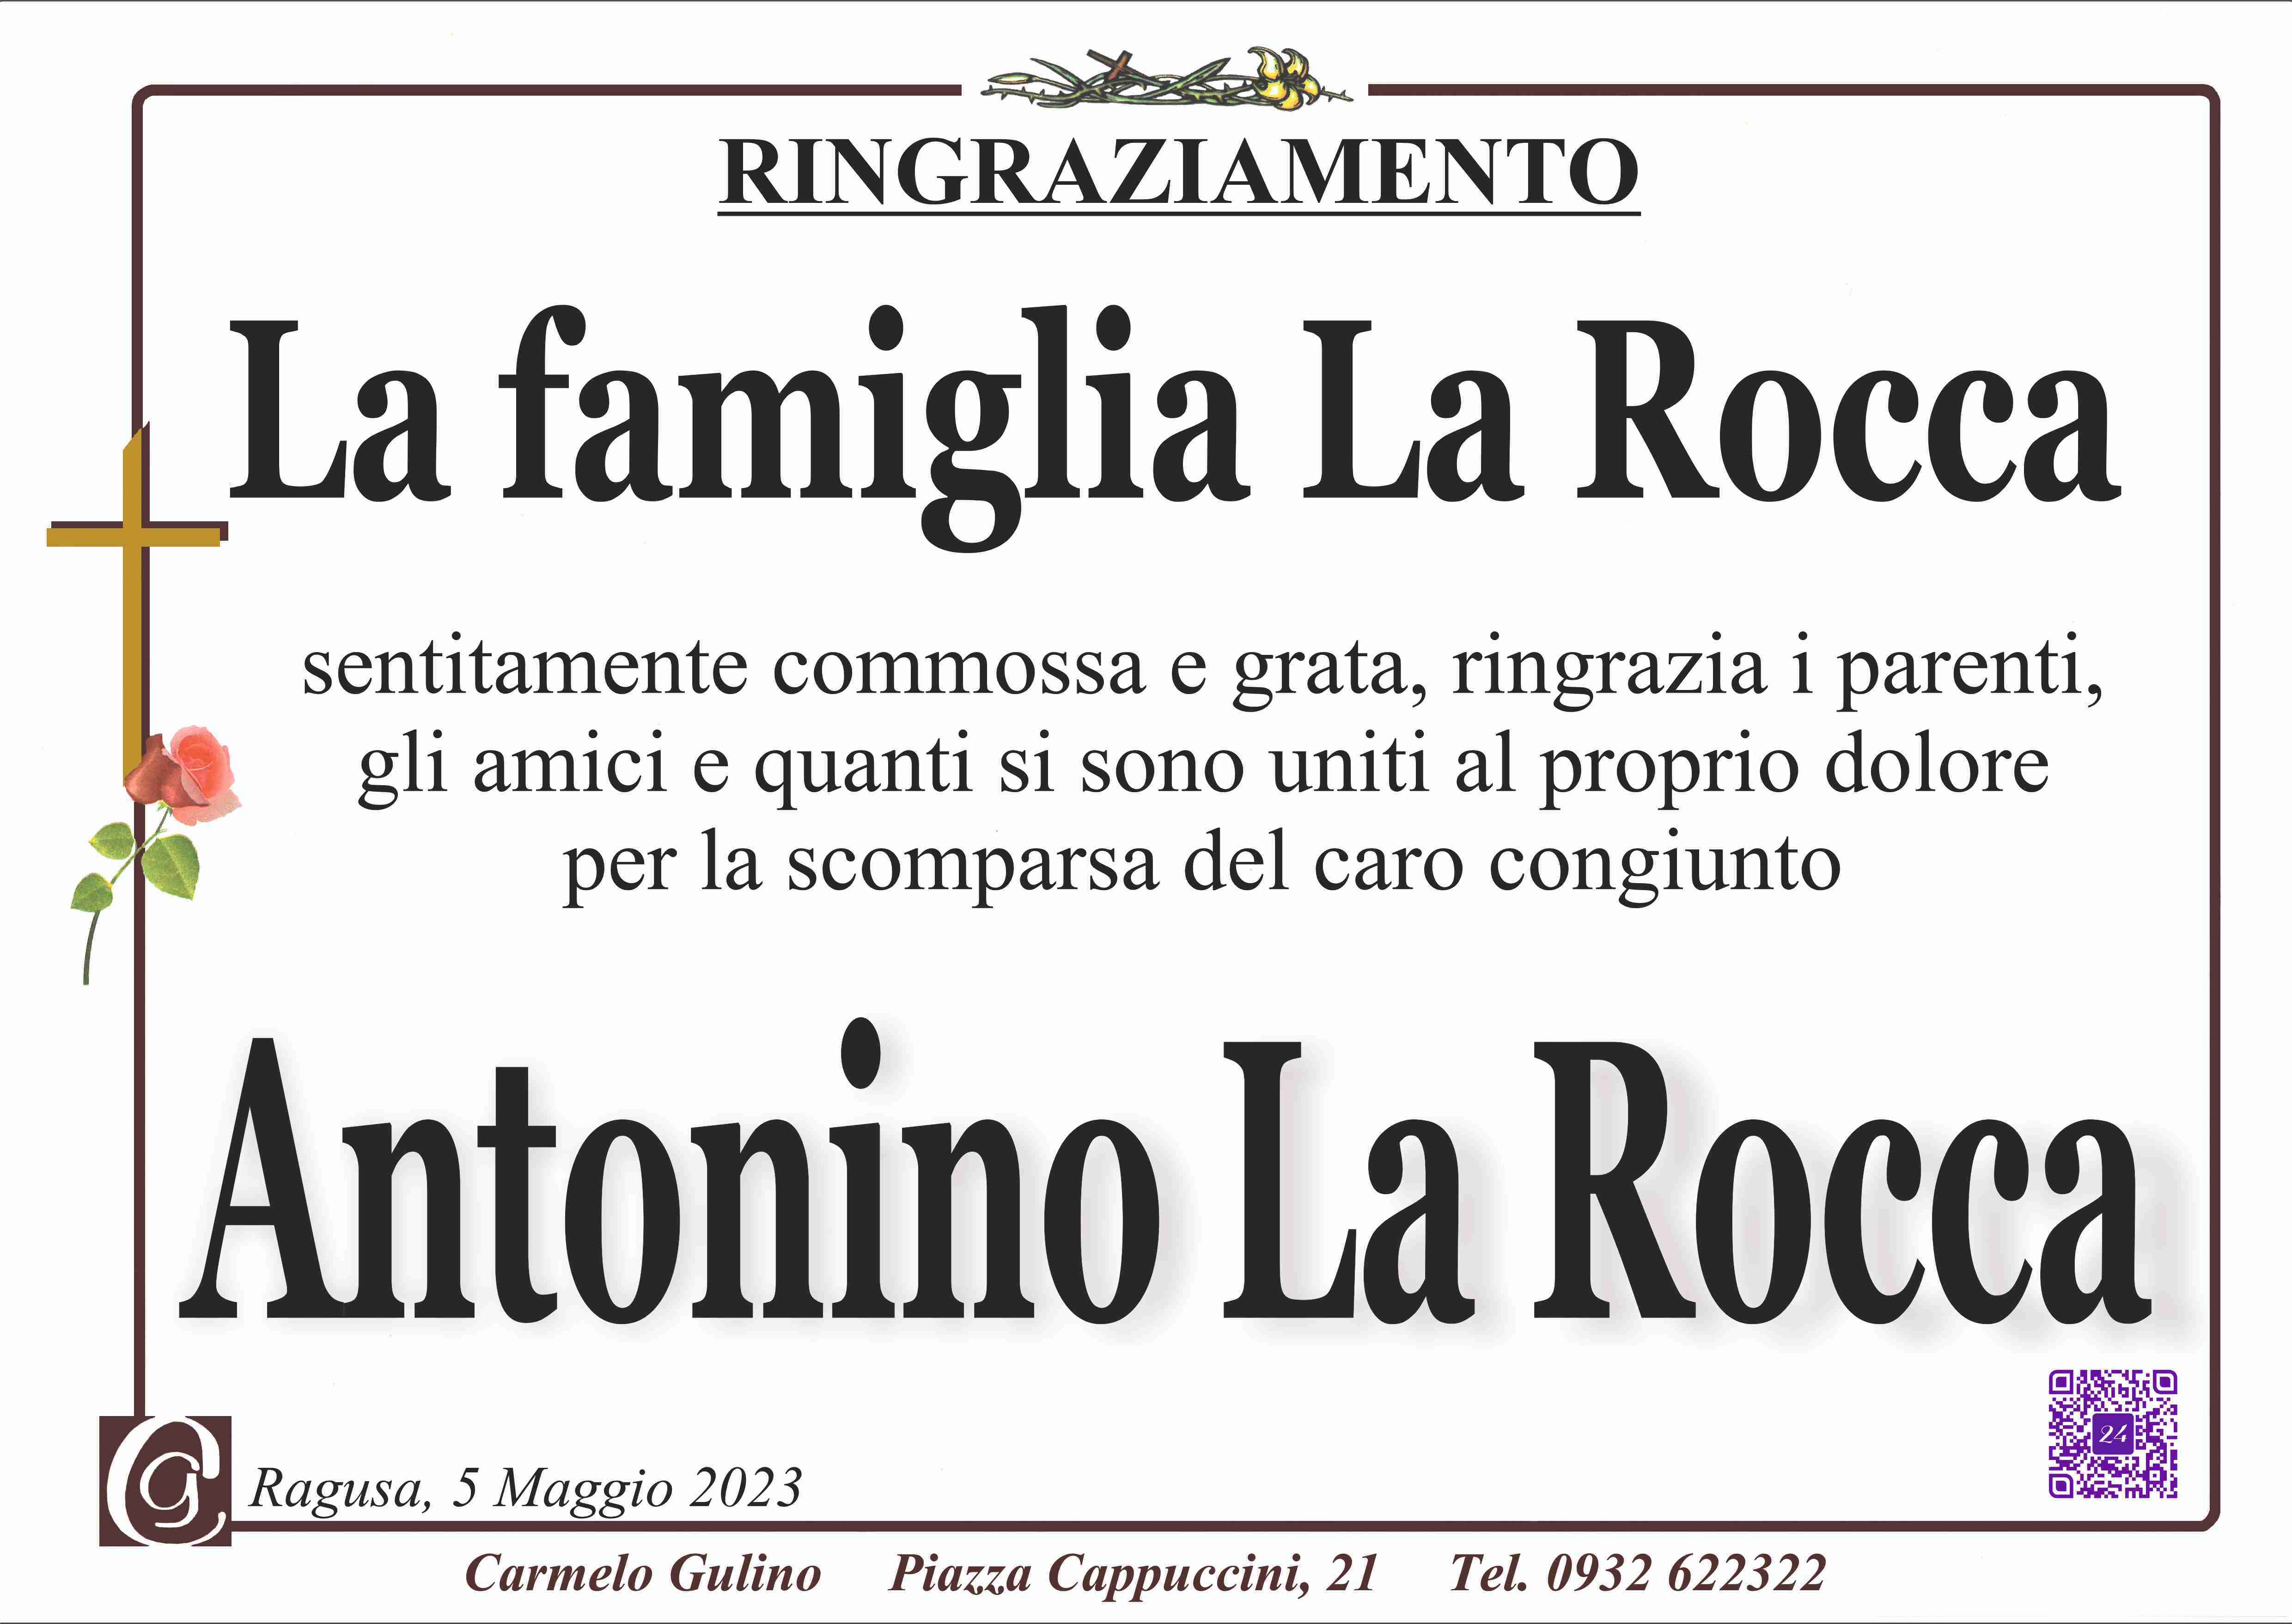 Antonino La Rocca